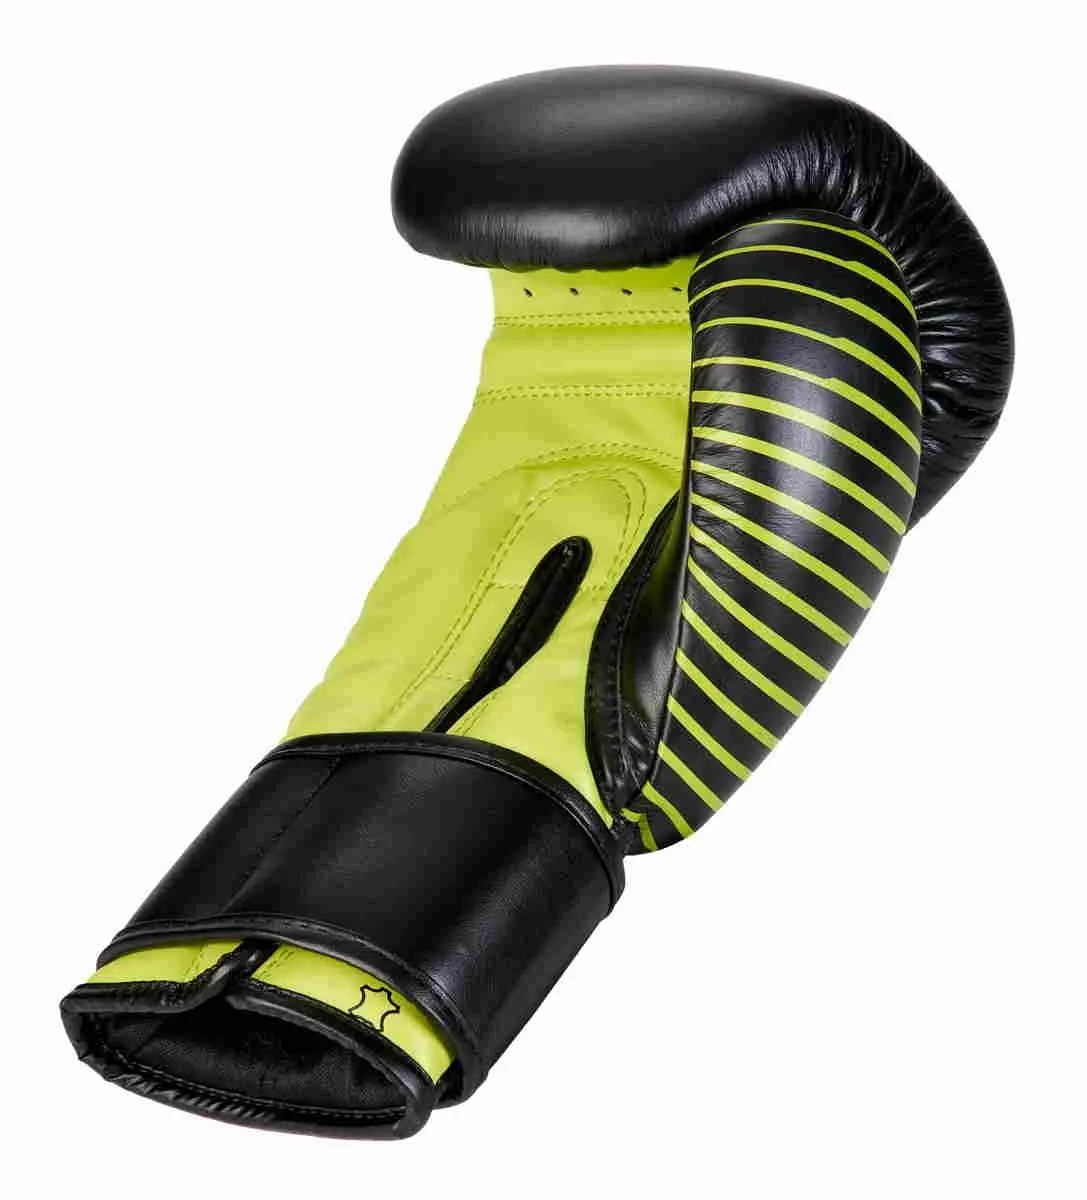 adidas Boxhandschuh Competition Leder schwarz|neongrün 10 OZ